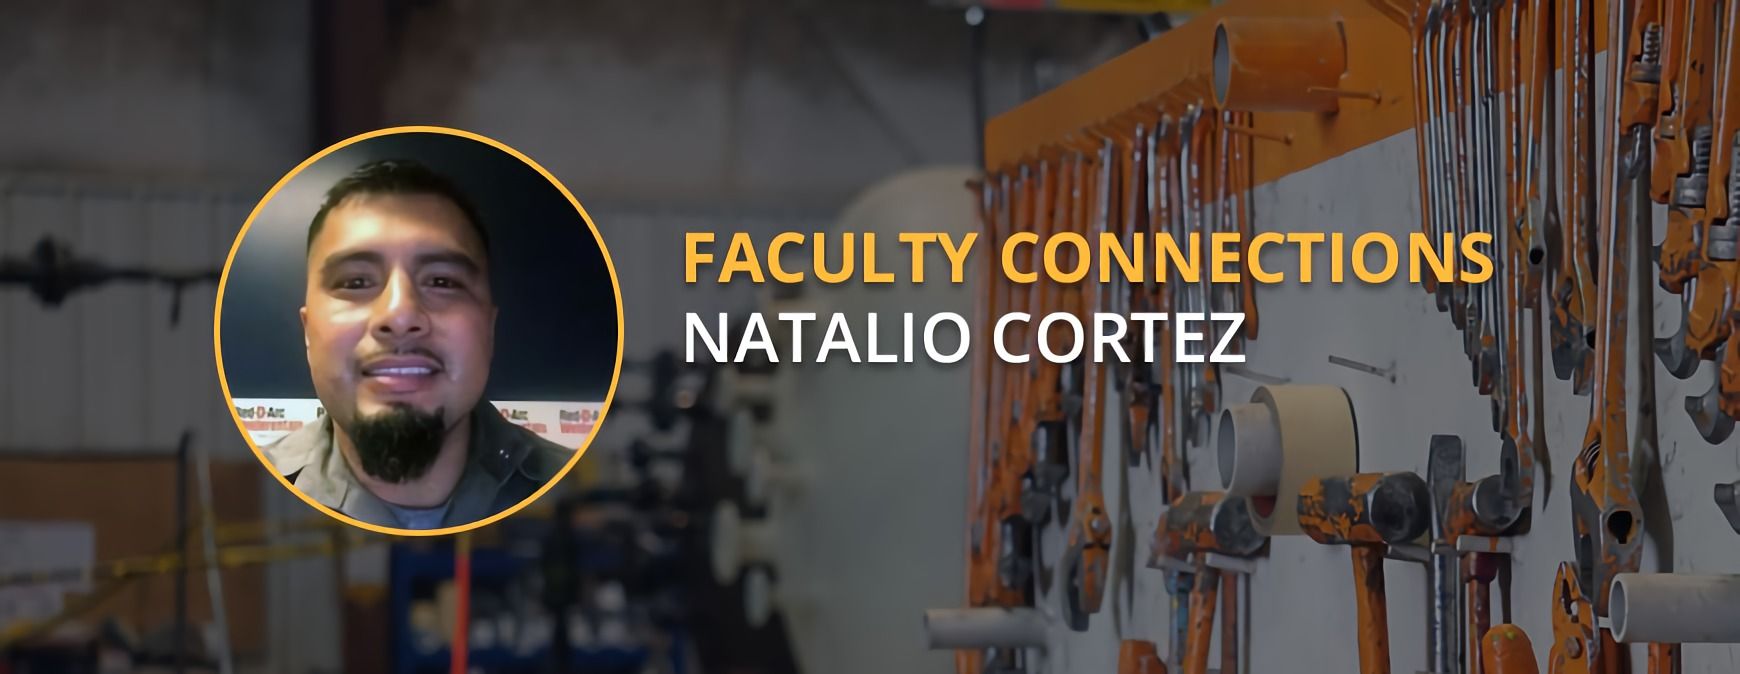 Natalio Cortez faculty connection